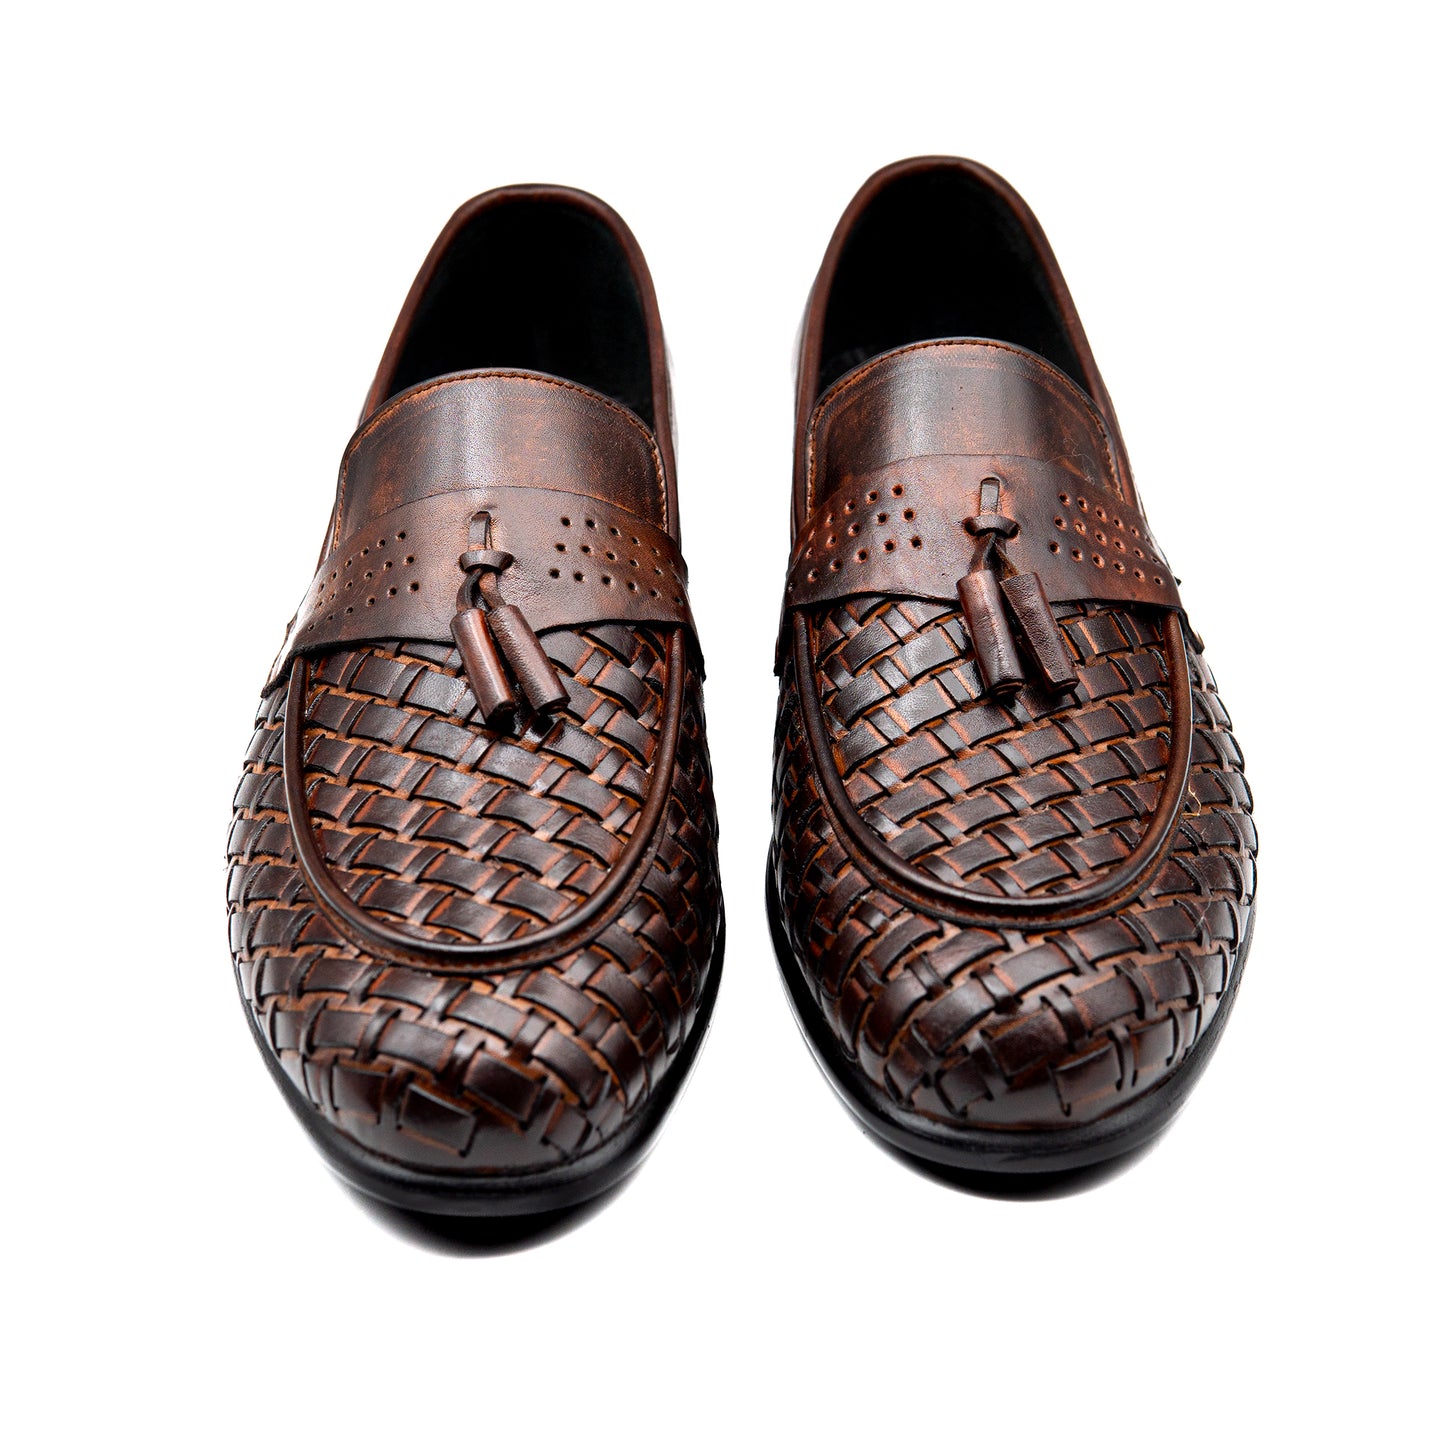 executive shoes